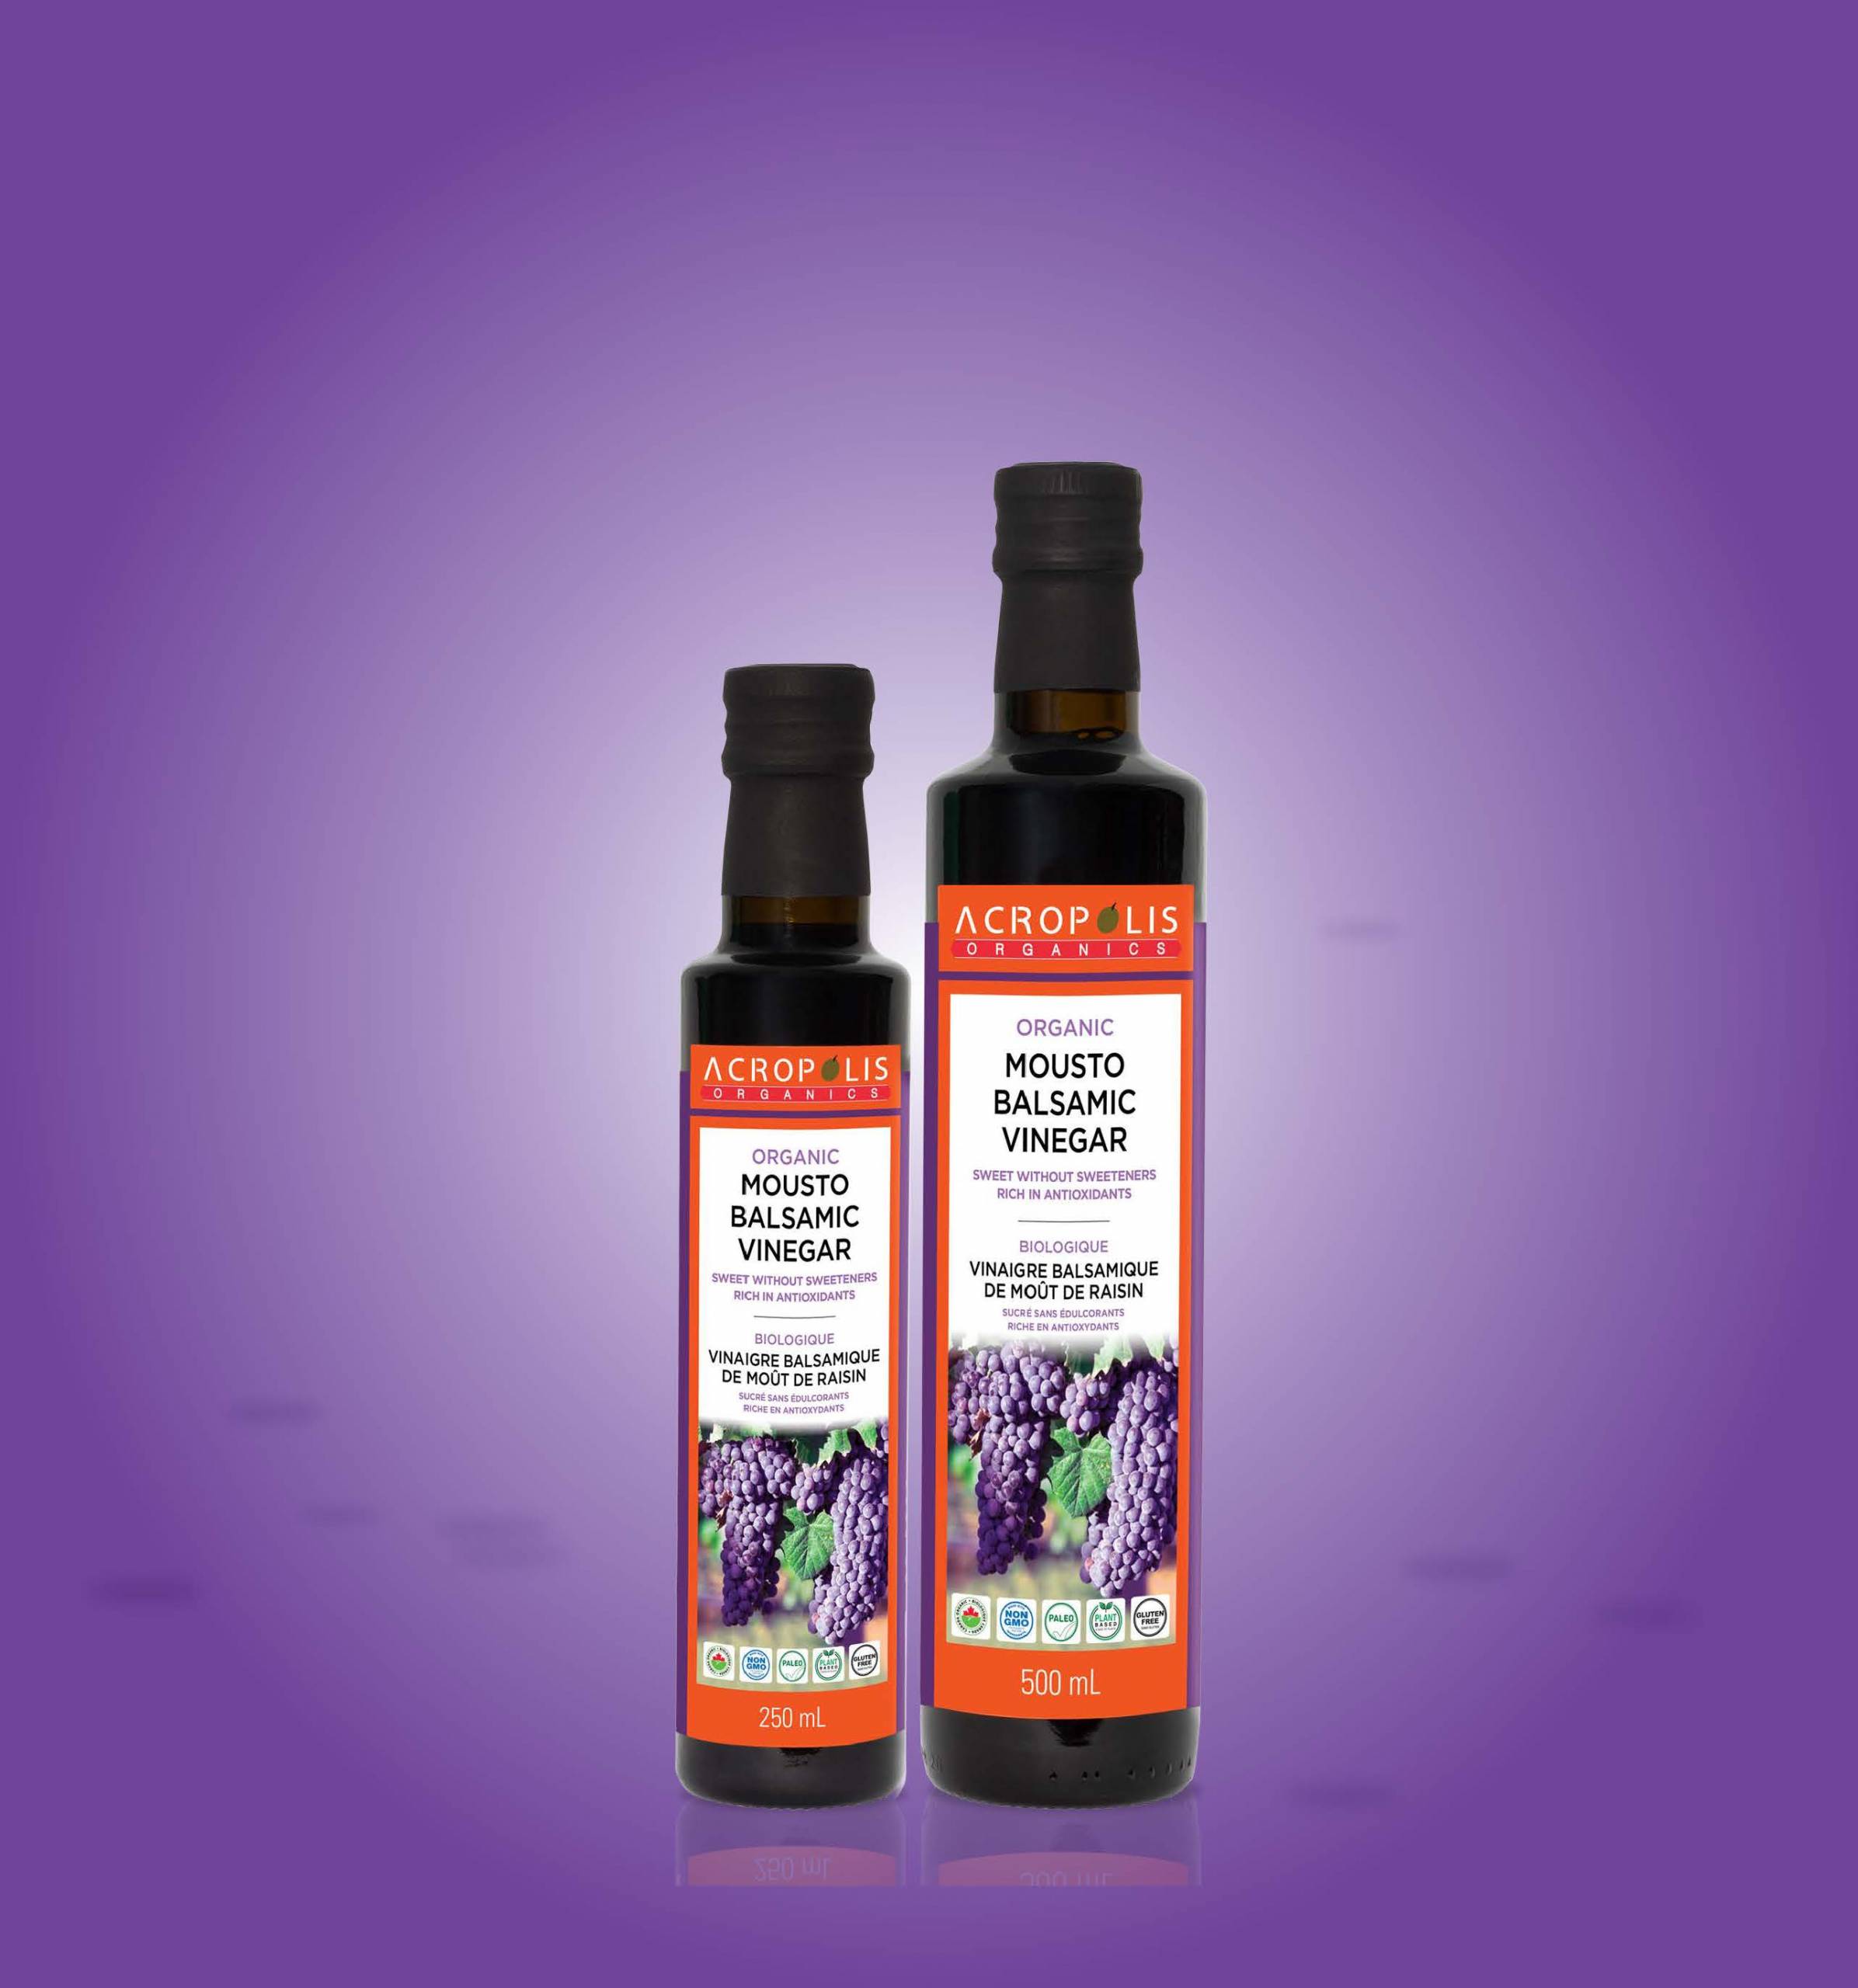 Acropolis Organics Organic Mousto Balsamic Vinegar product phtoto with purple background